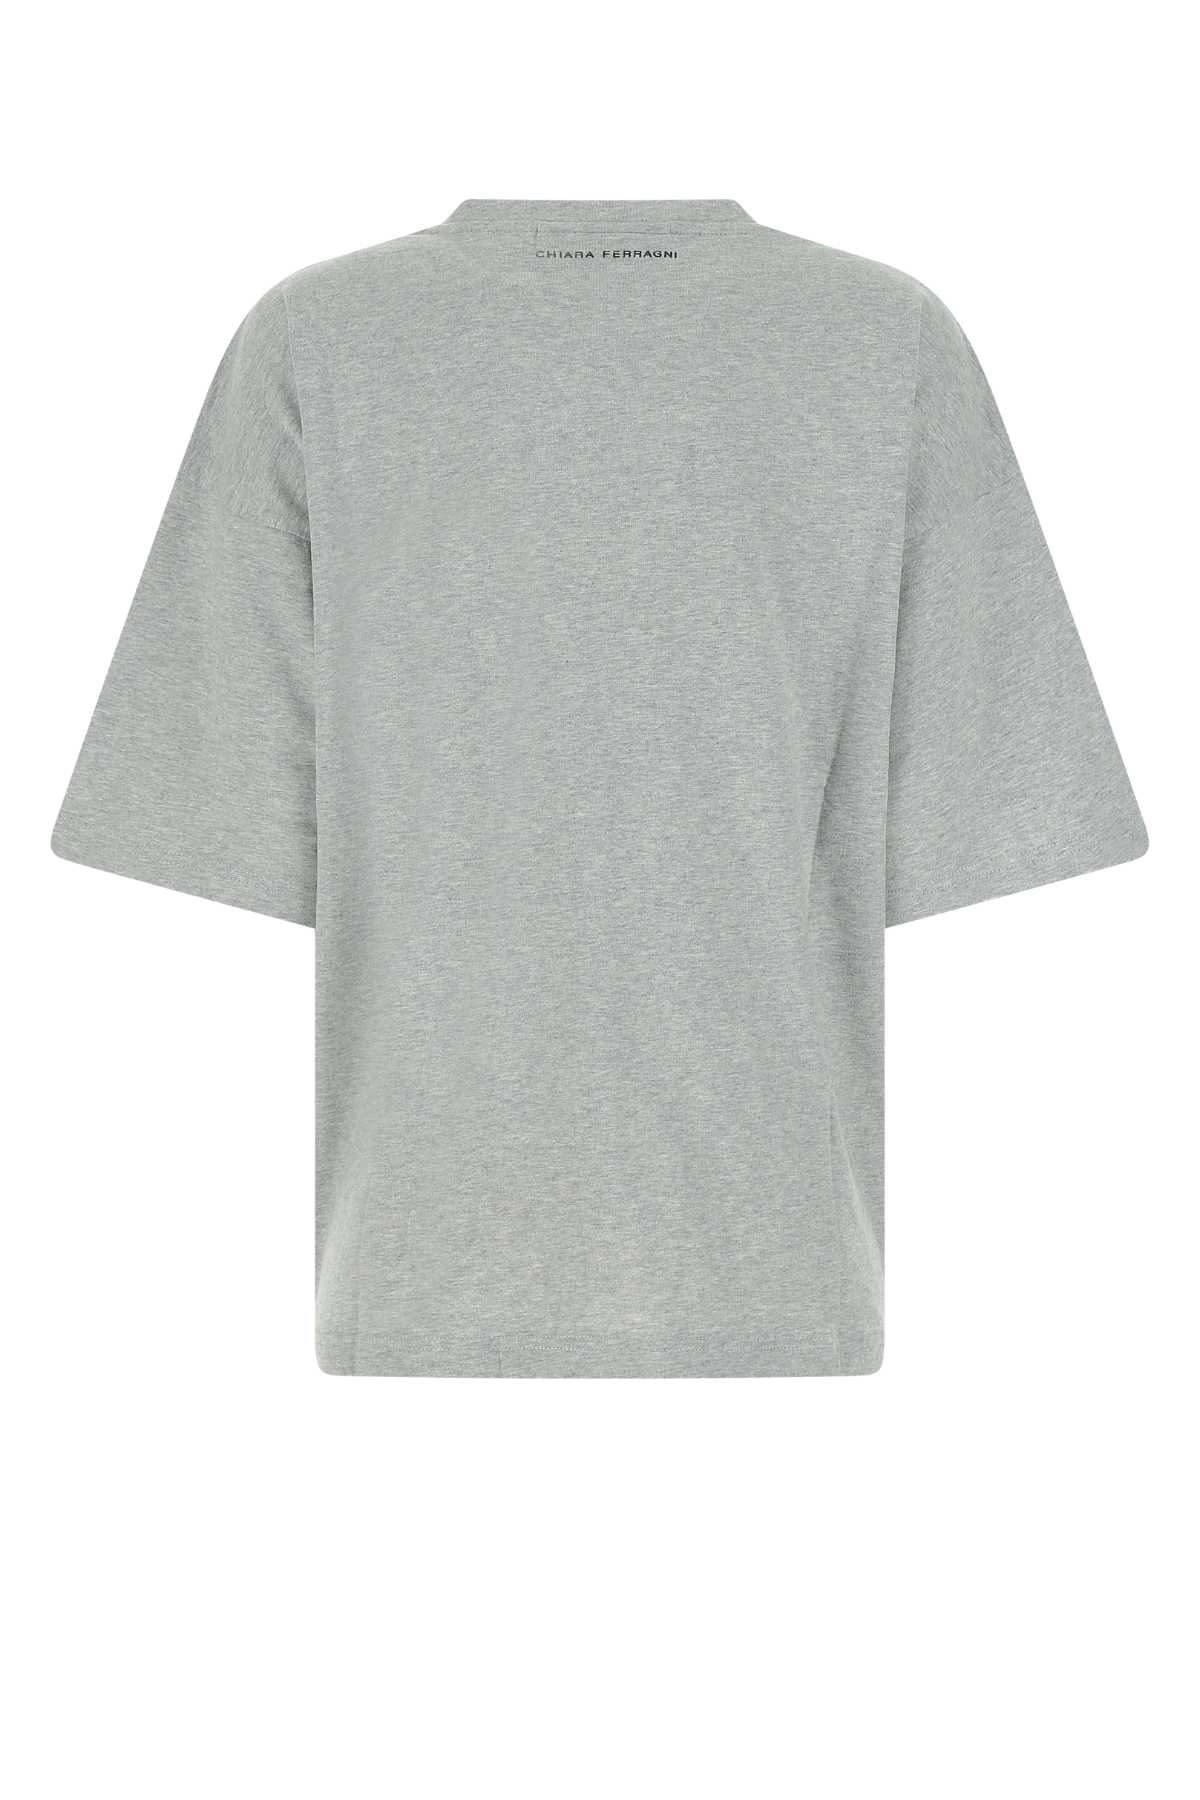 Chiara Ferragni Melange Grey Cotton Oversize T-shirt In 806